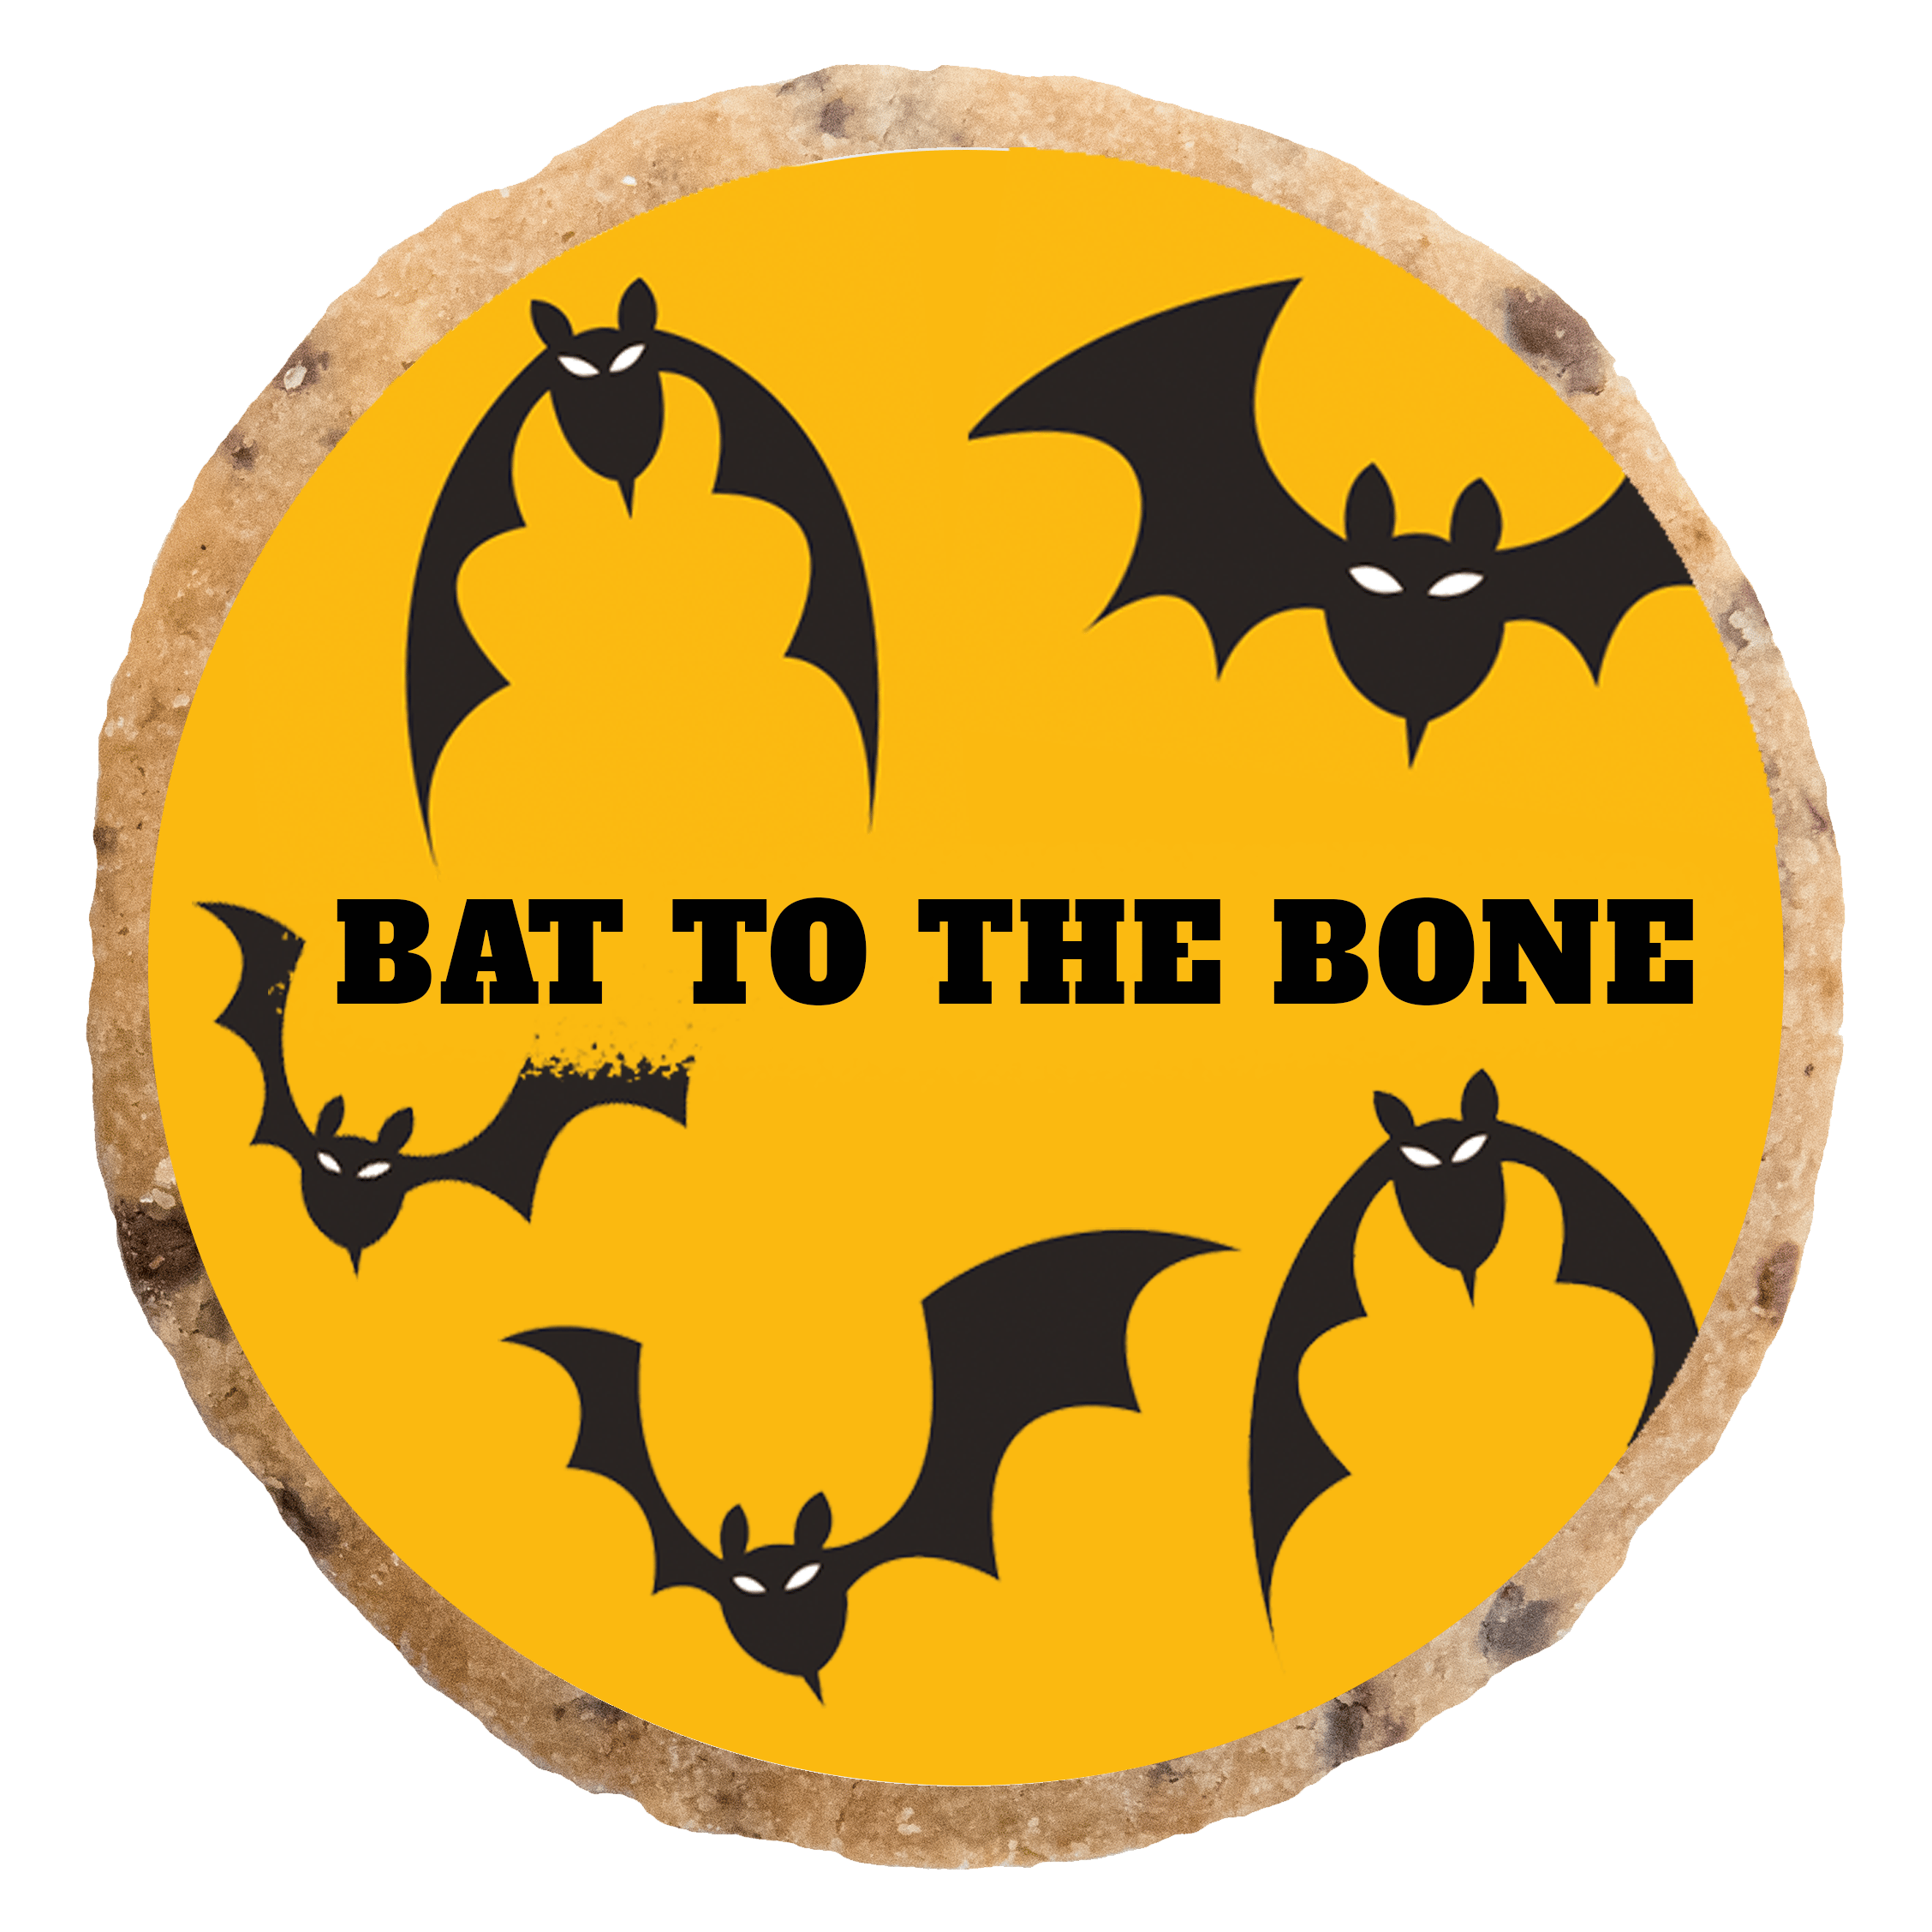 "Bat to the bone" MotivKEKS